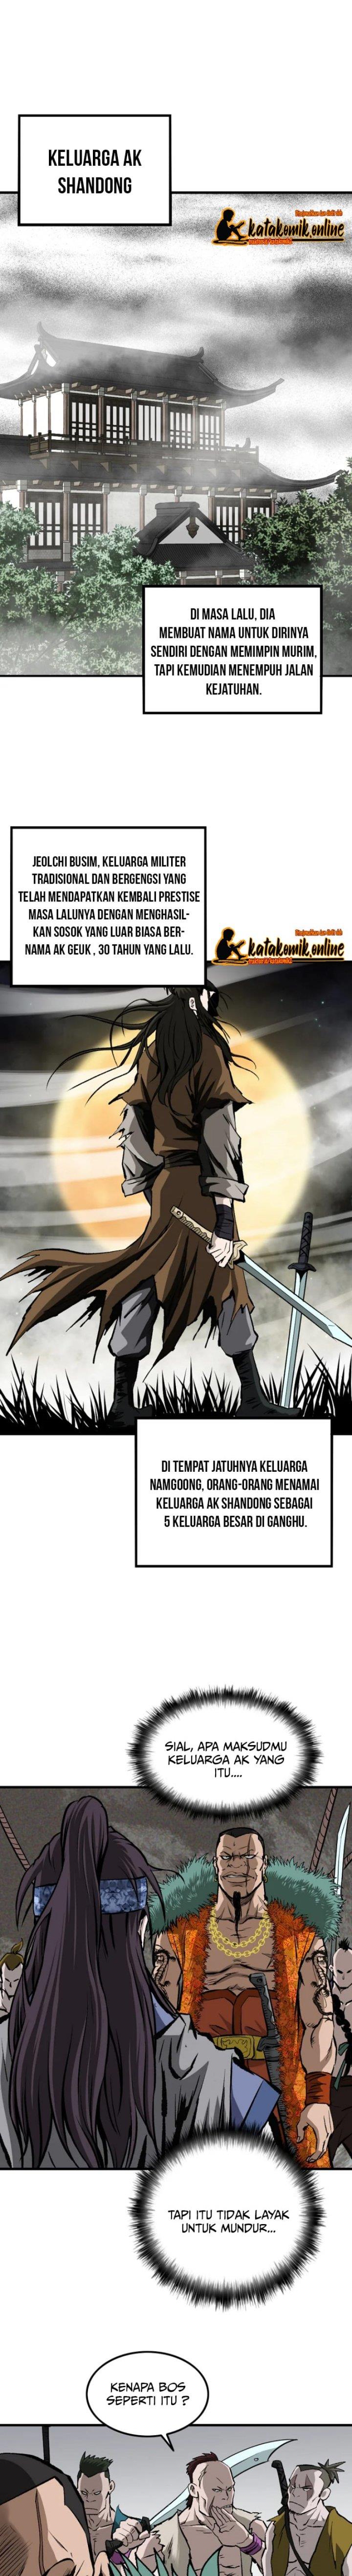 Archer Sword God: Descendants of the Archer Chapter 3